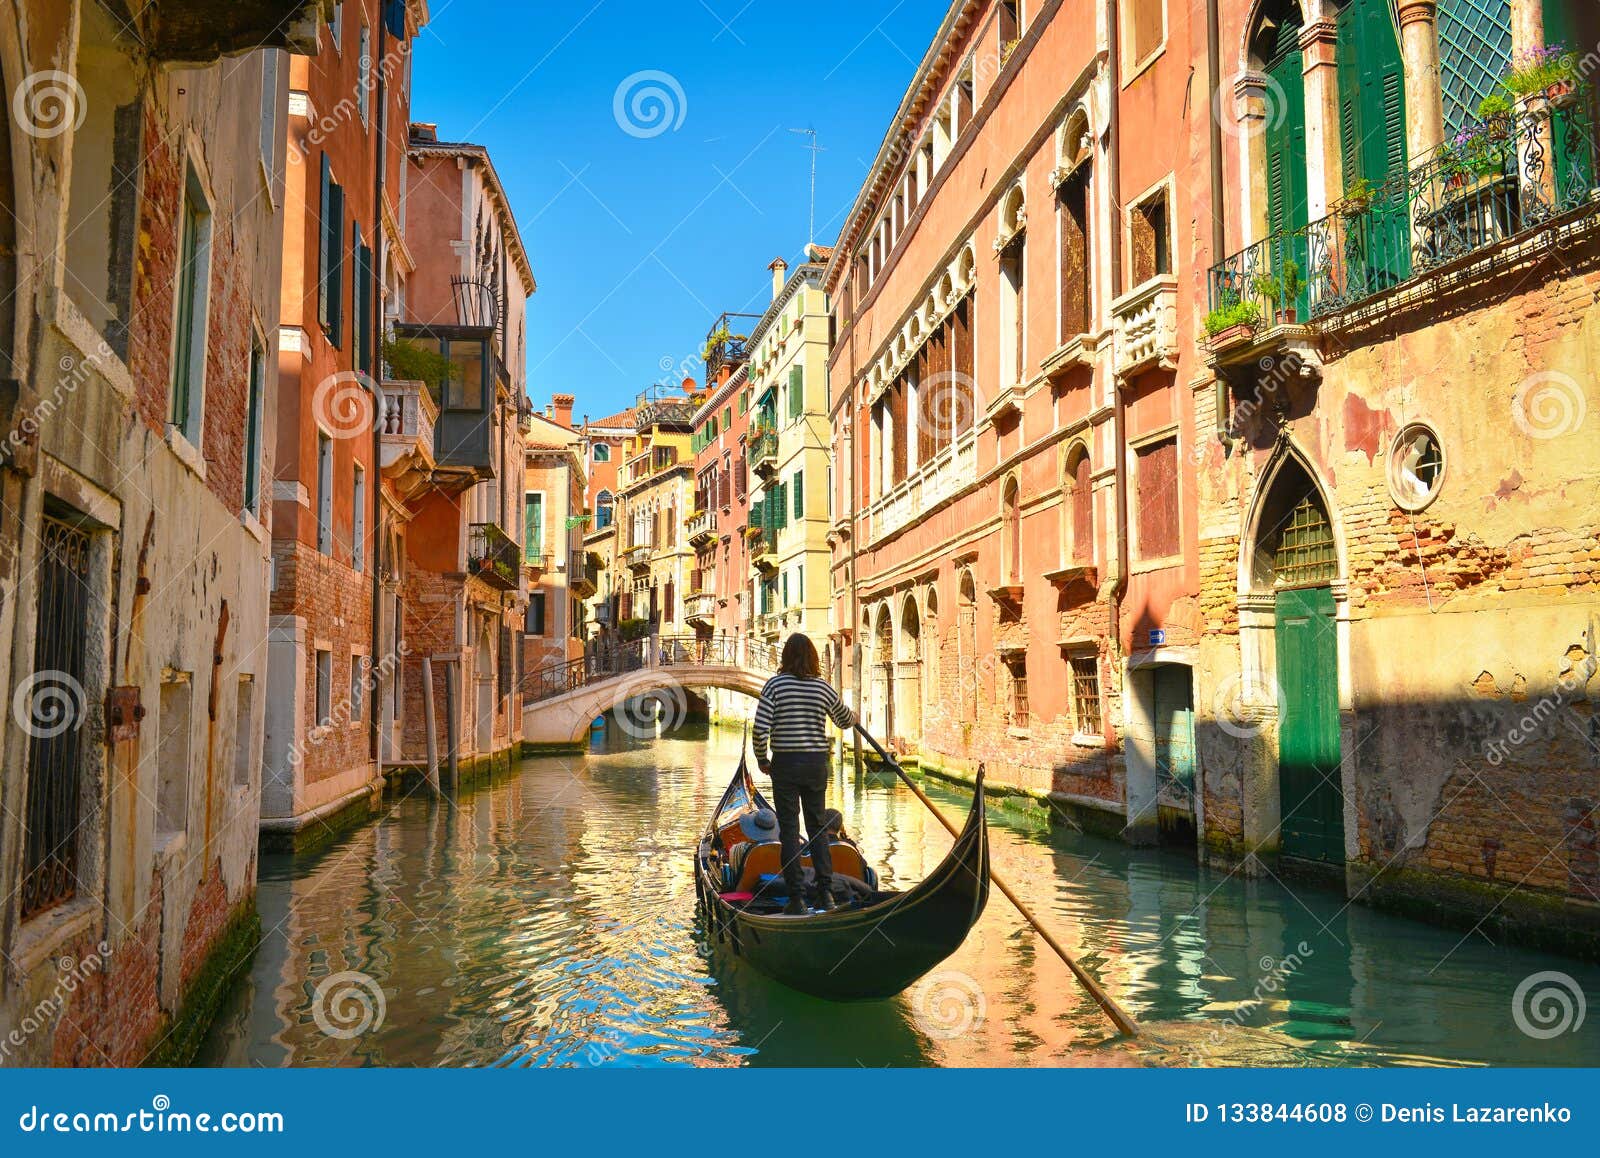 Venetian Italian Architecture in Sunny Spring. Stock Photo - Image of ...